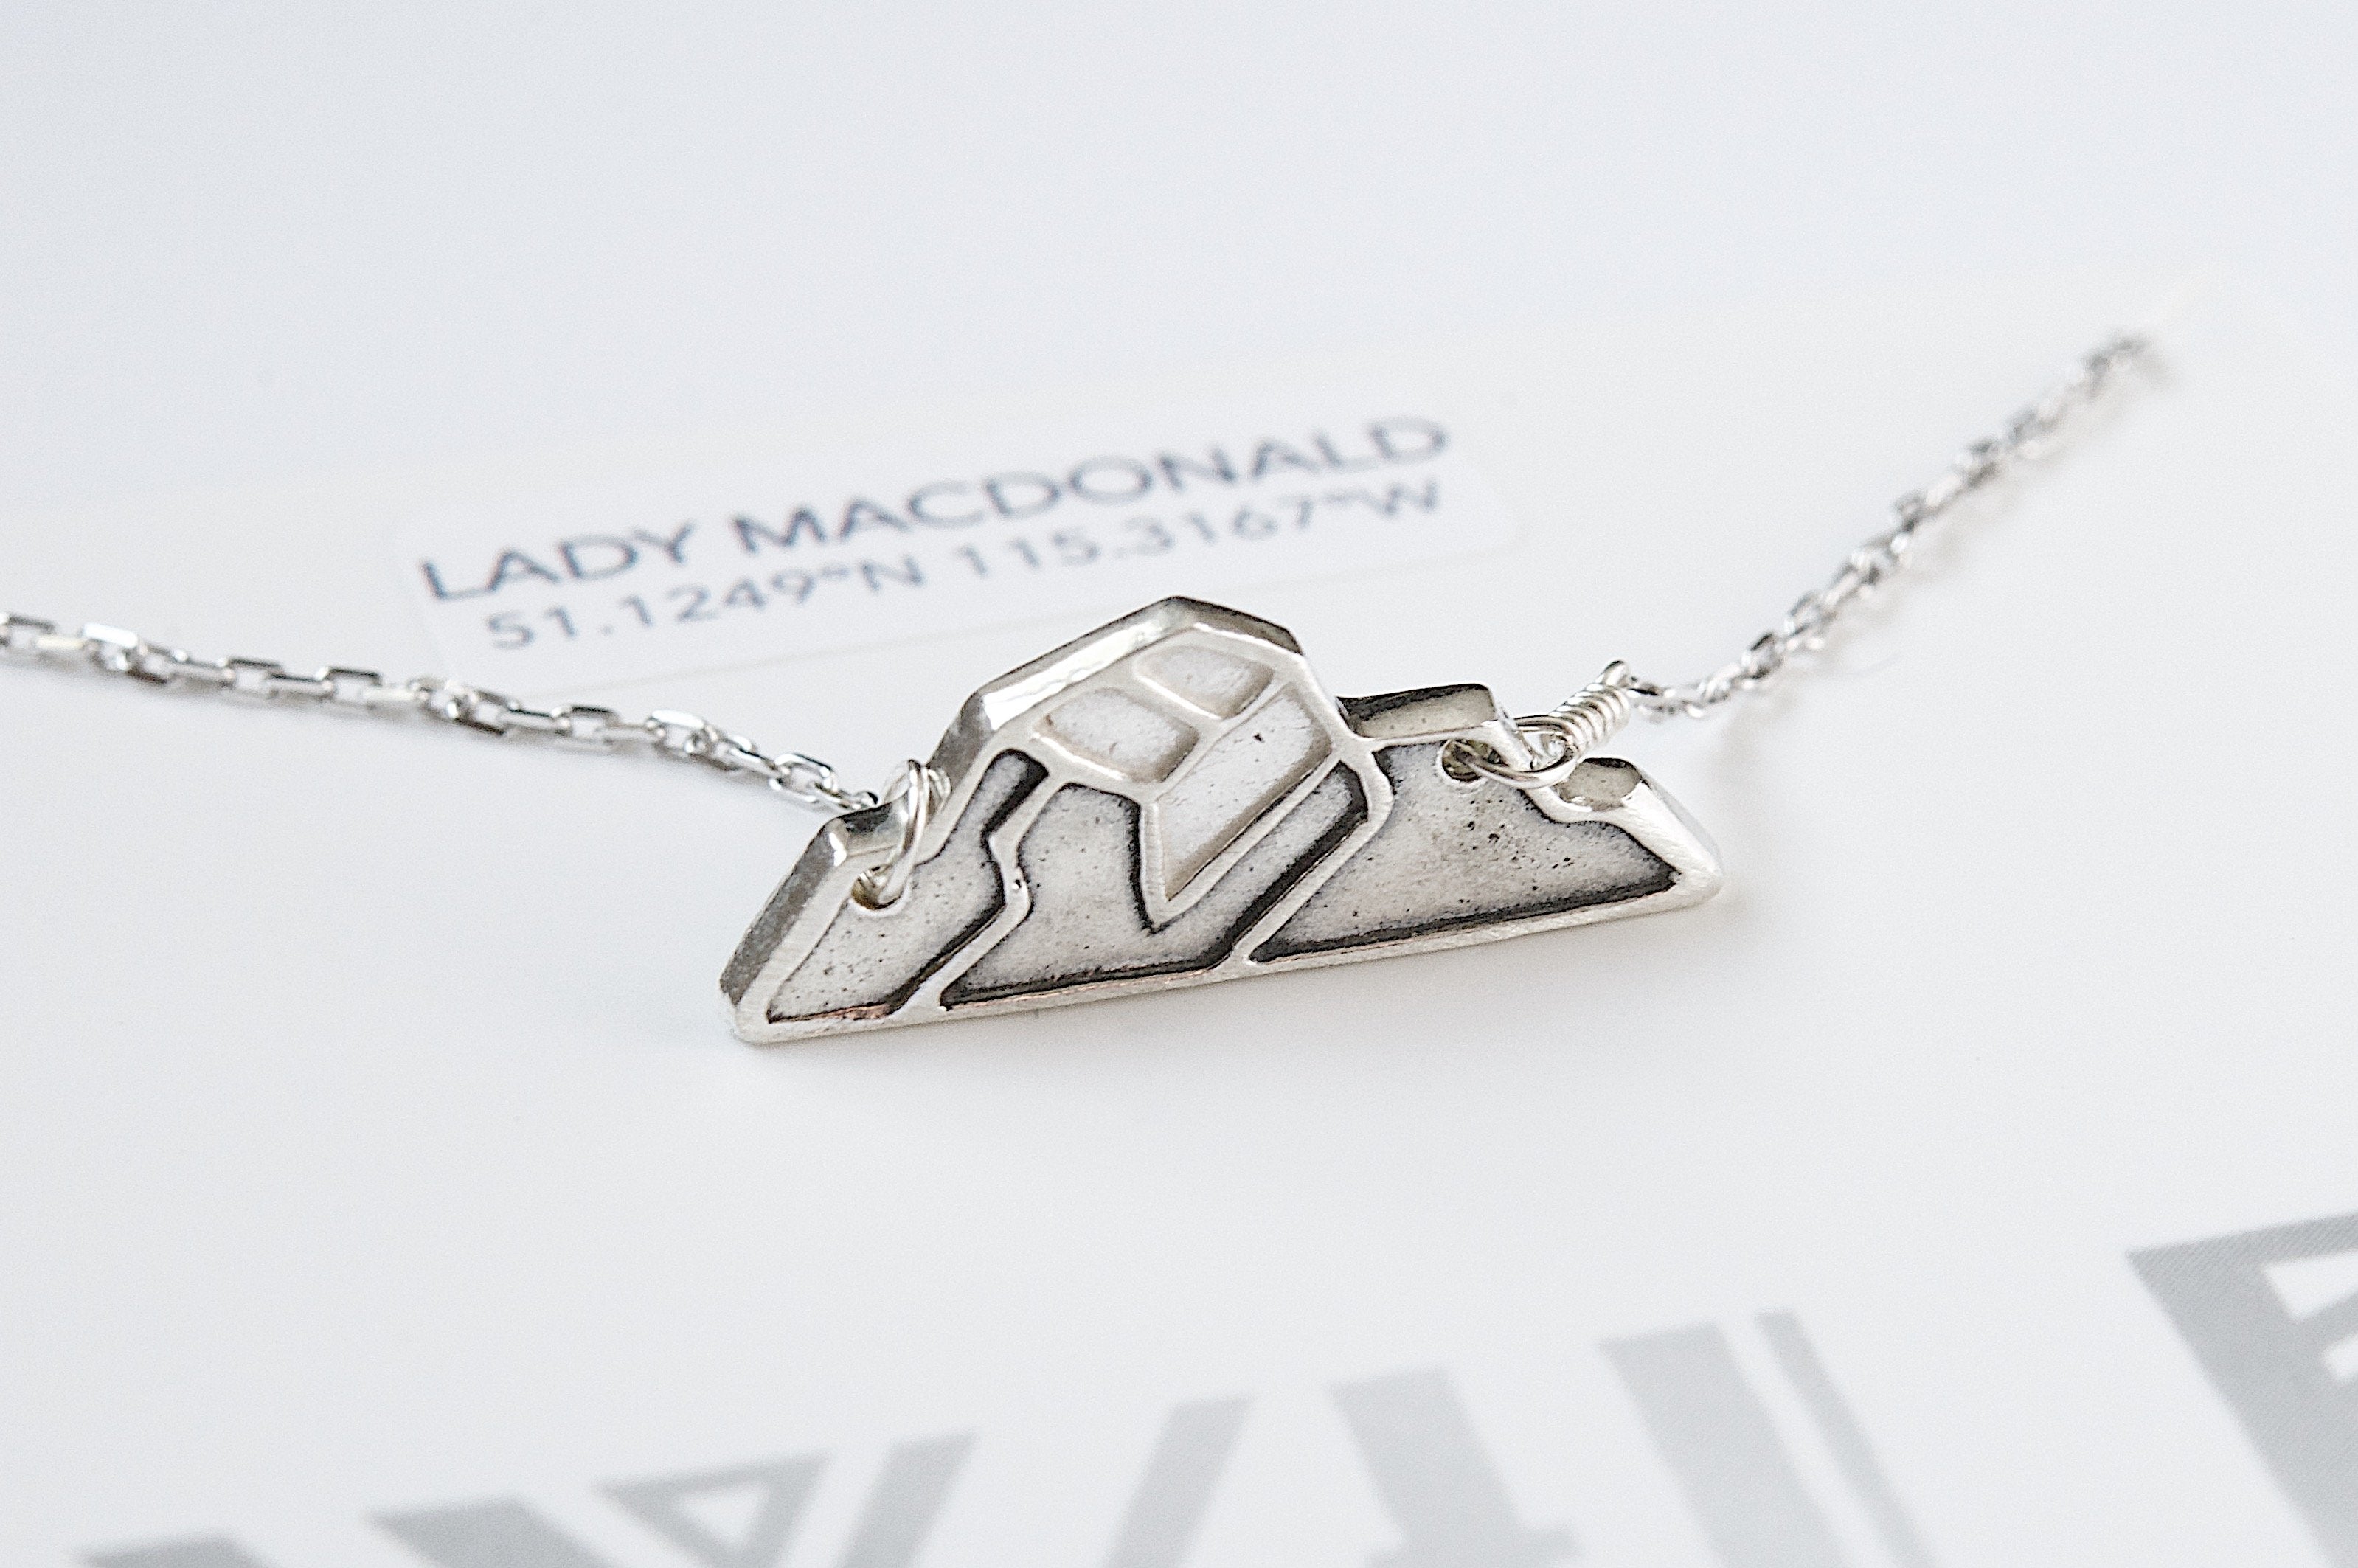 Mount Lady MacDonald Necklace